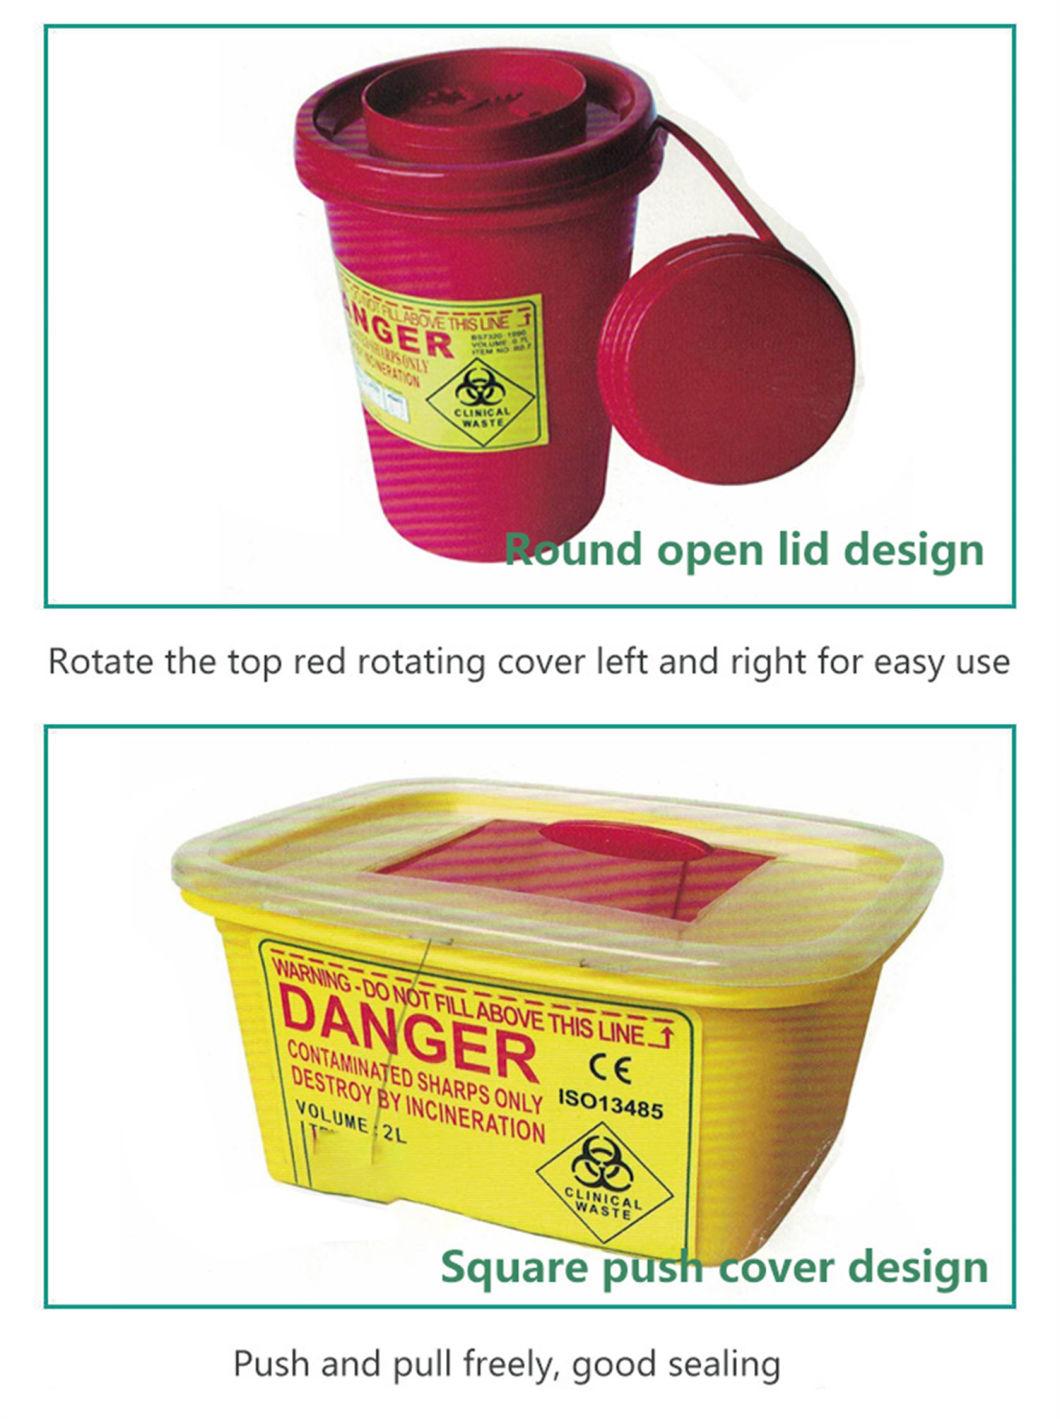 Kitchen Household Plastic Sharps Container Biohazard Needle Disposal Waste Box